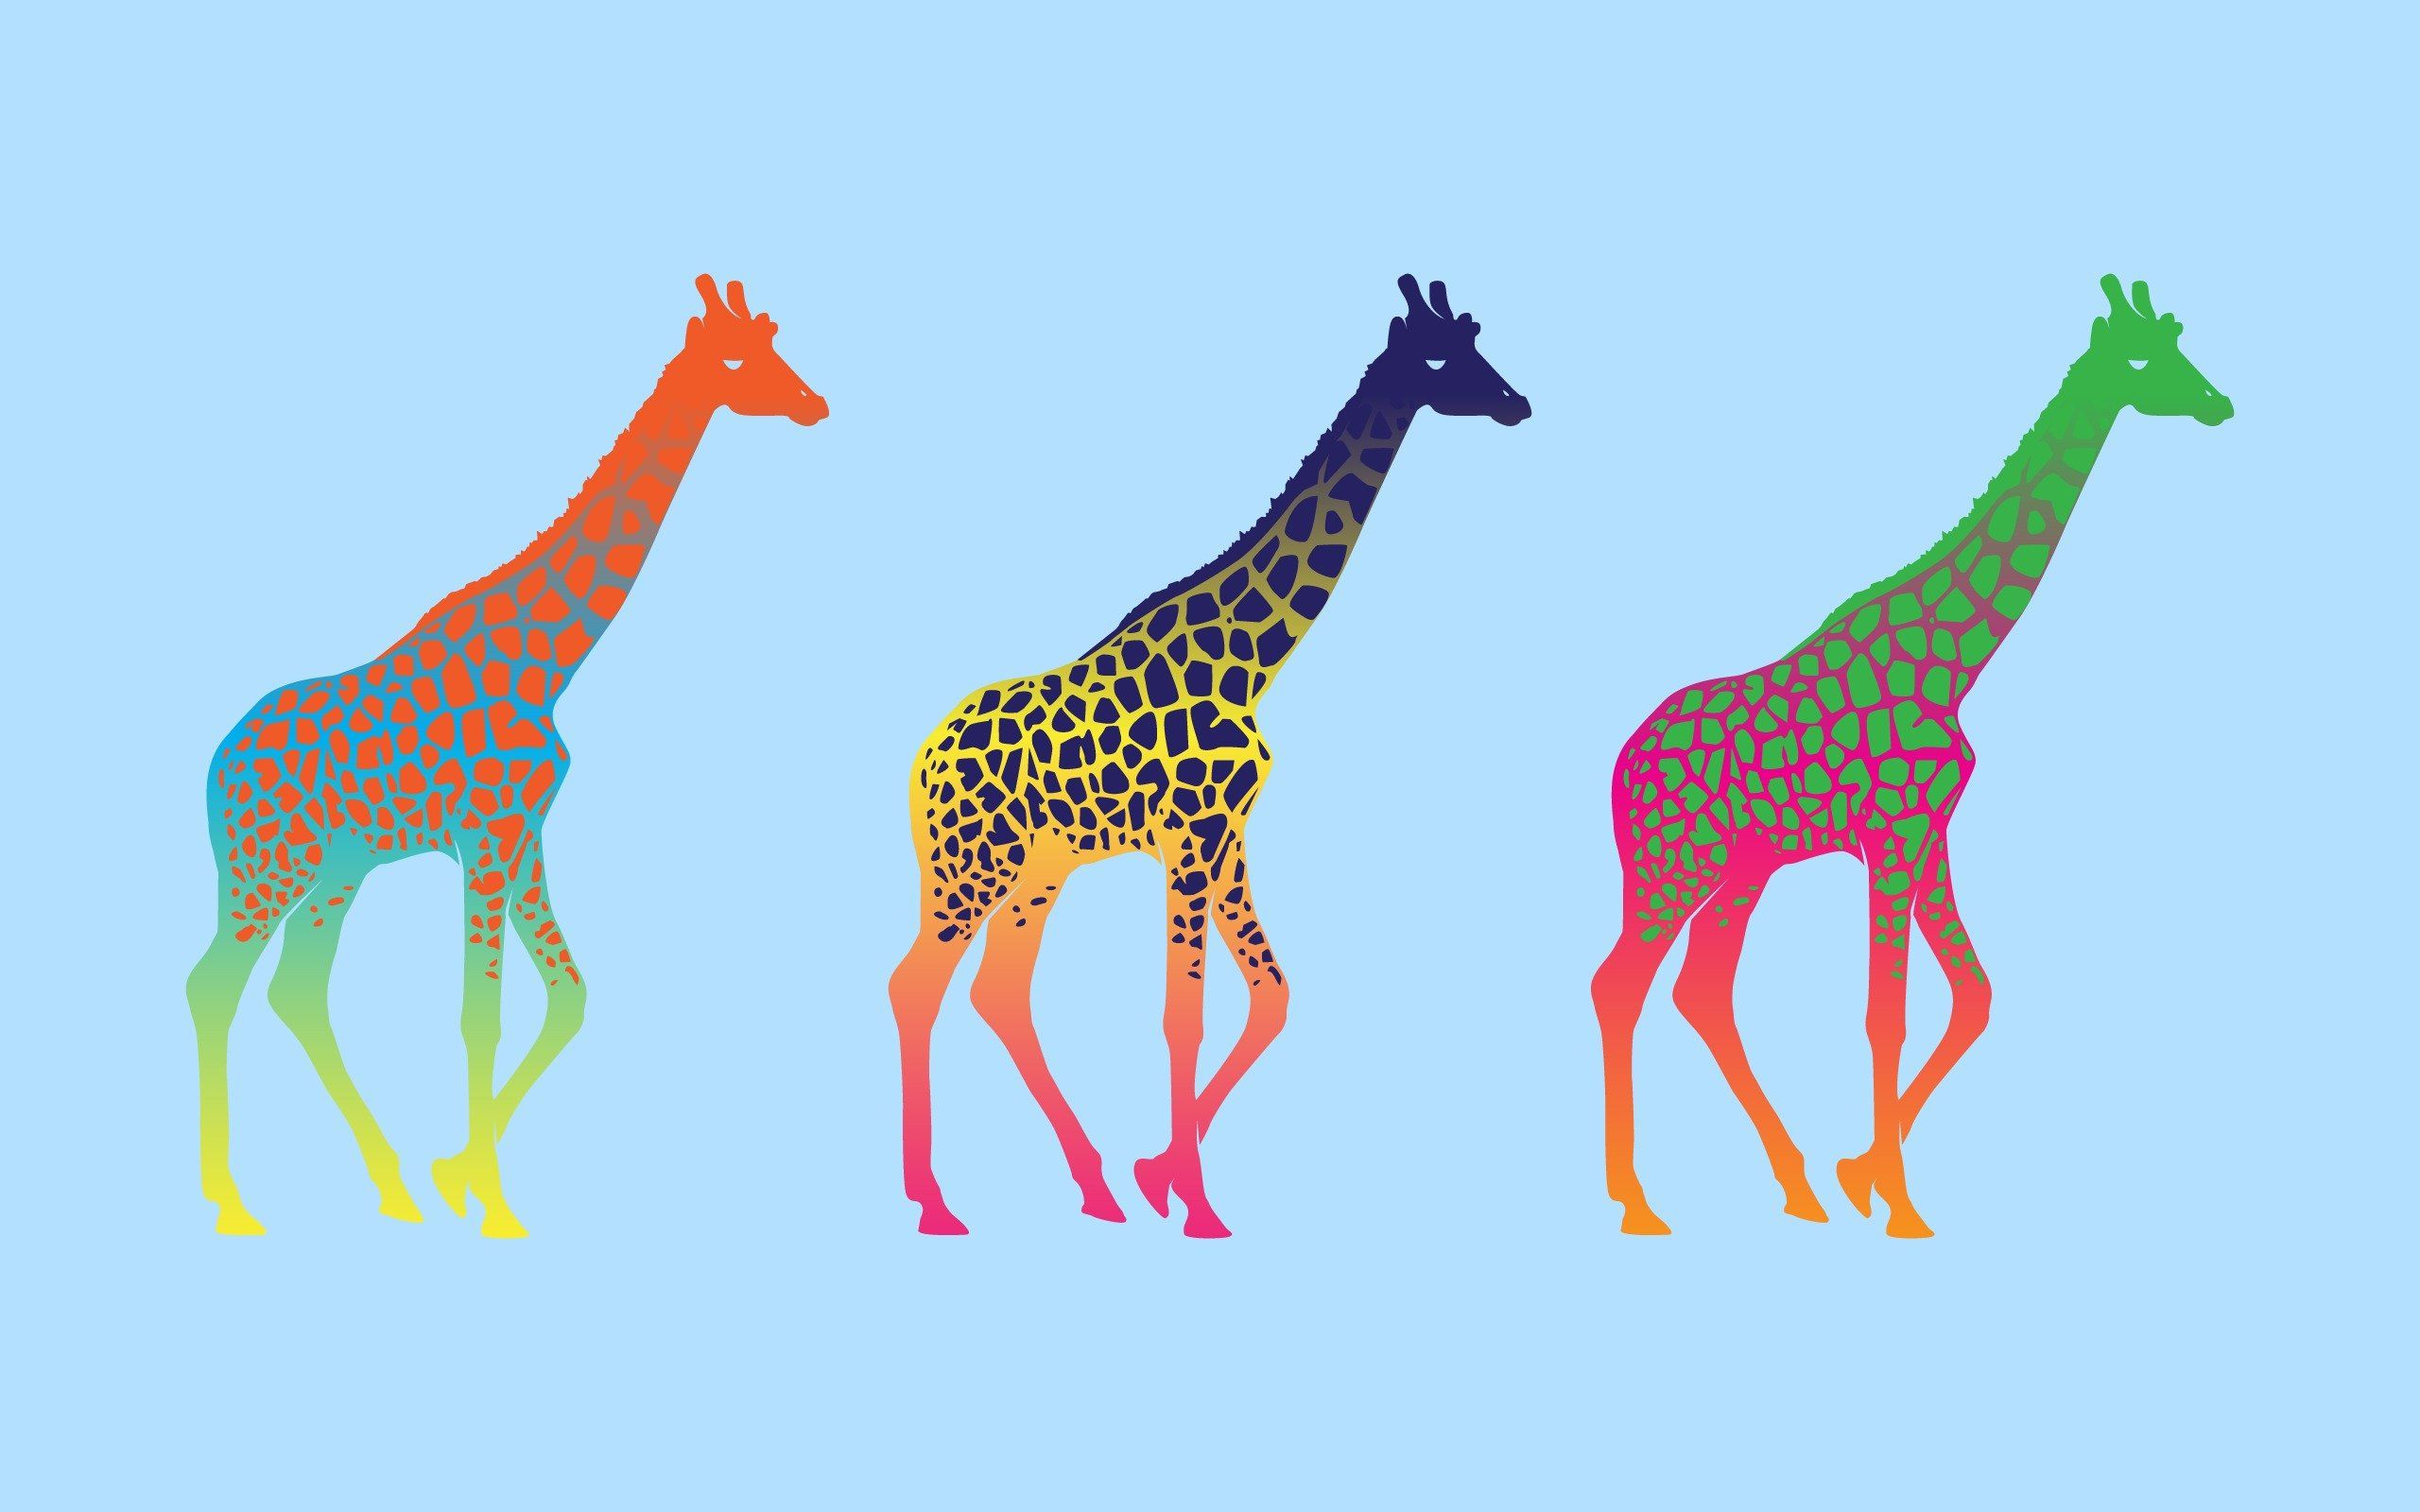  Giraffe Hintergrundbild 2560x1600. Giraffes 4K wallpaper for your desktop or mobile screen free and easy to download